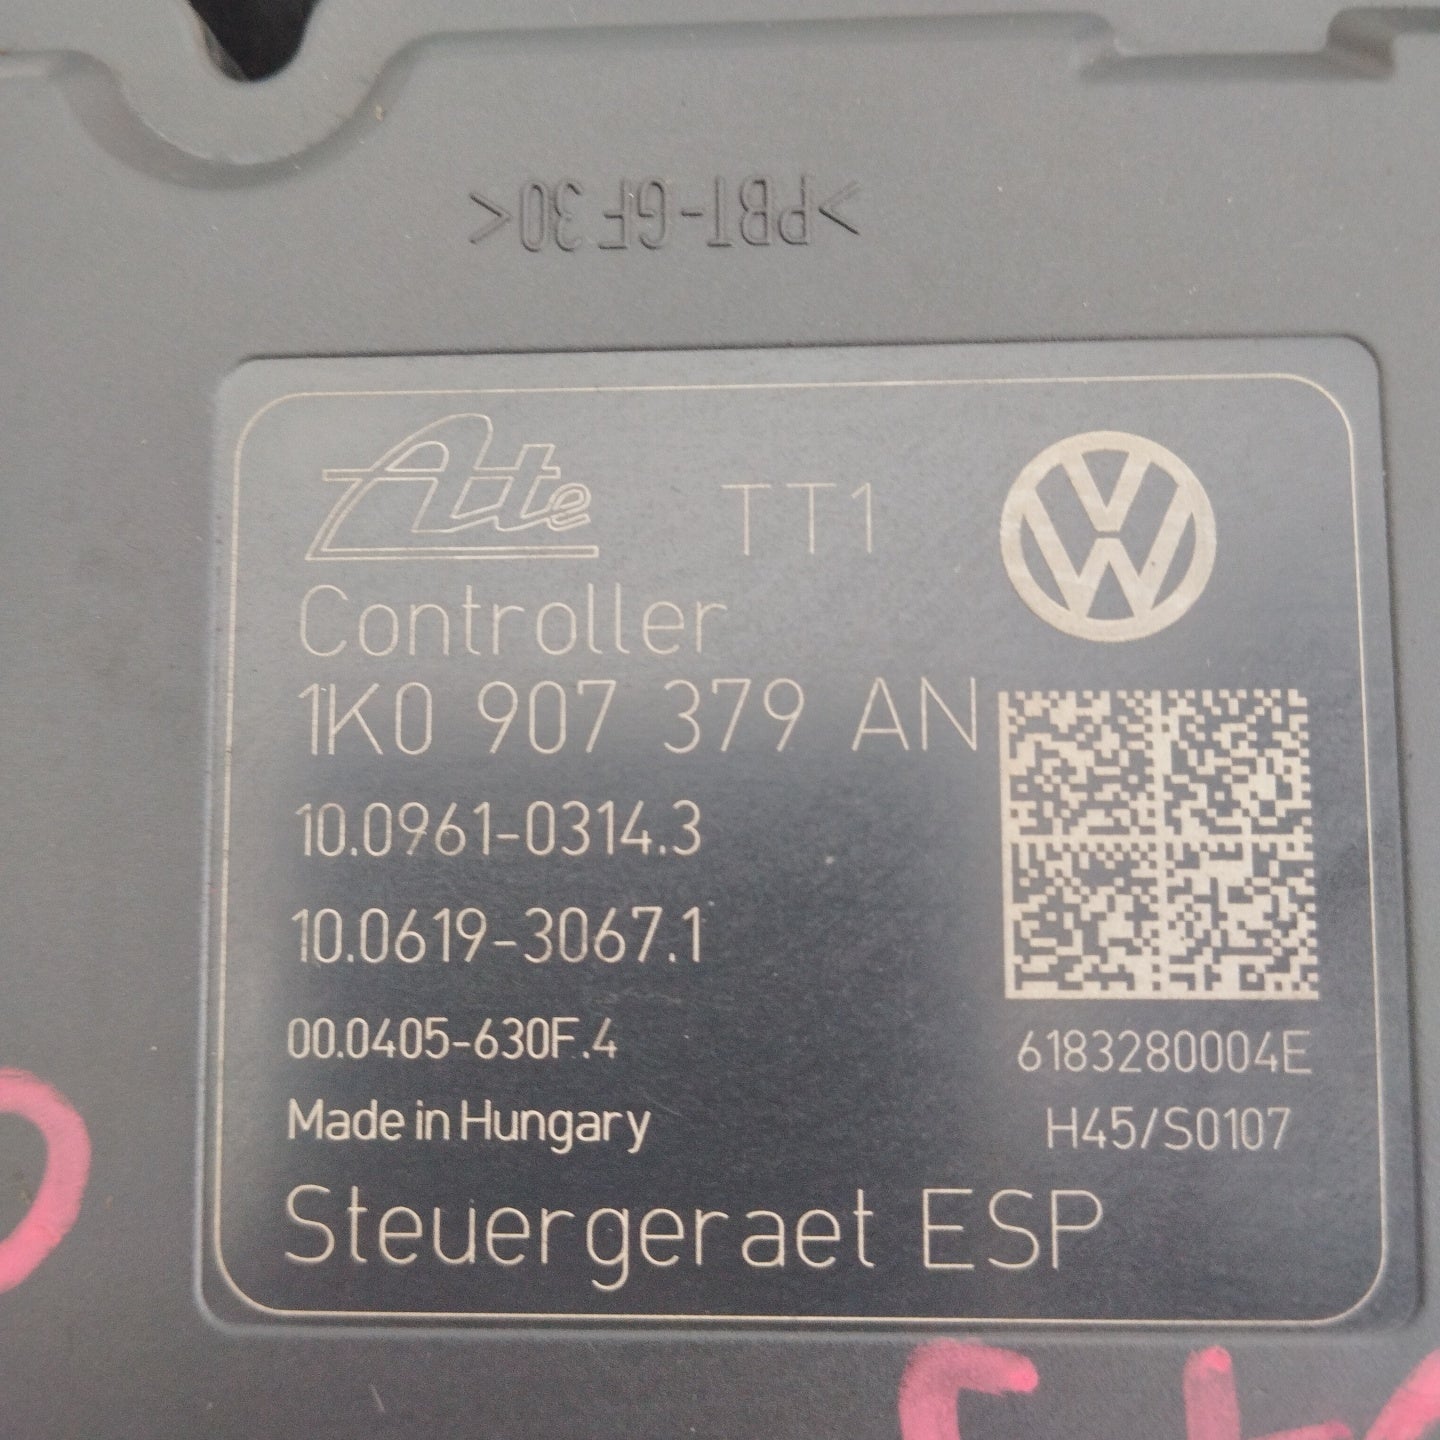 Abs Audi A3 / Volkswagen Golf VI 1.9 TDI 2010 Cod. 1k0907379an ecoAG3089